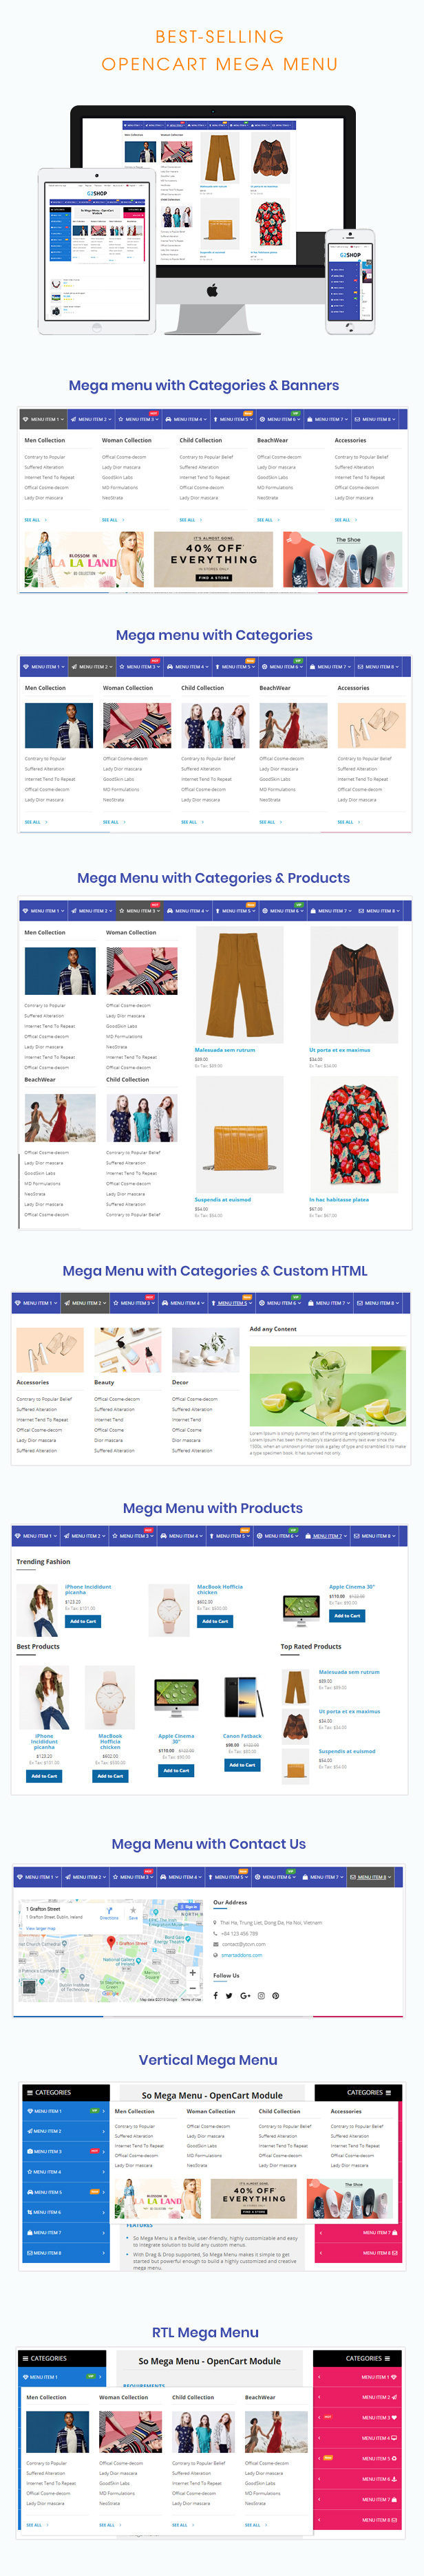 mega menu with custom html